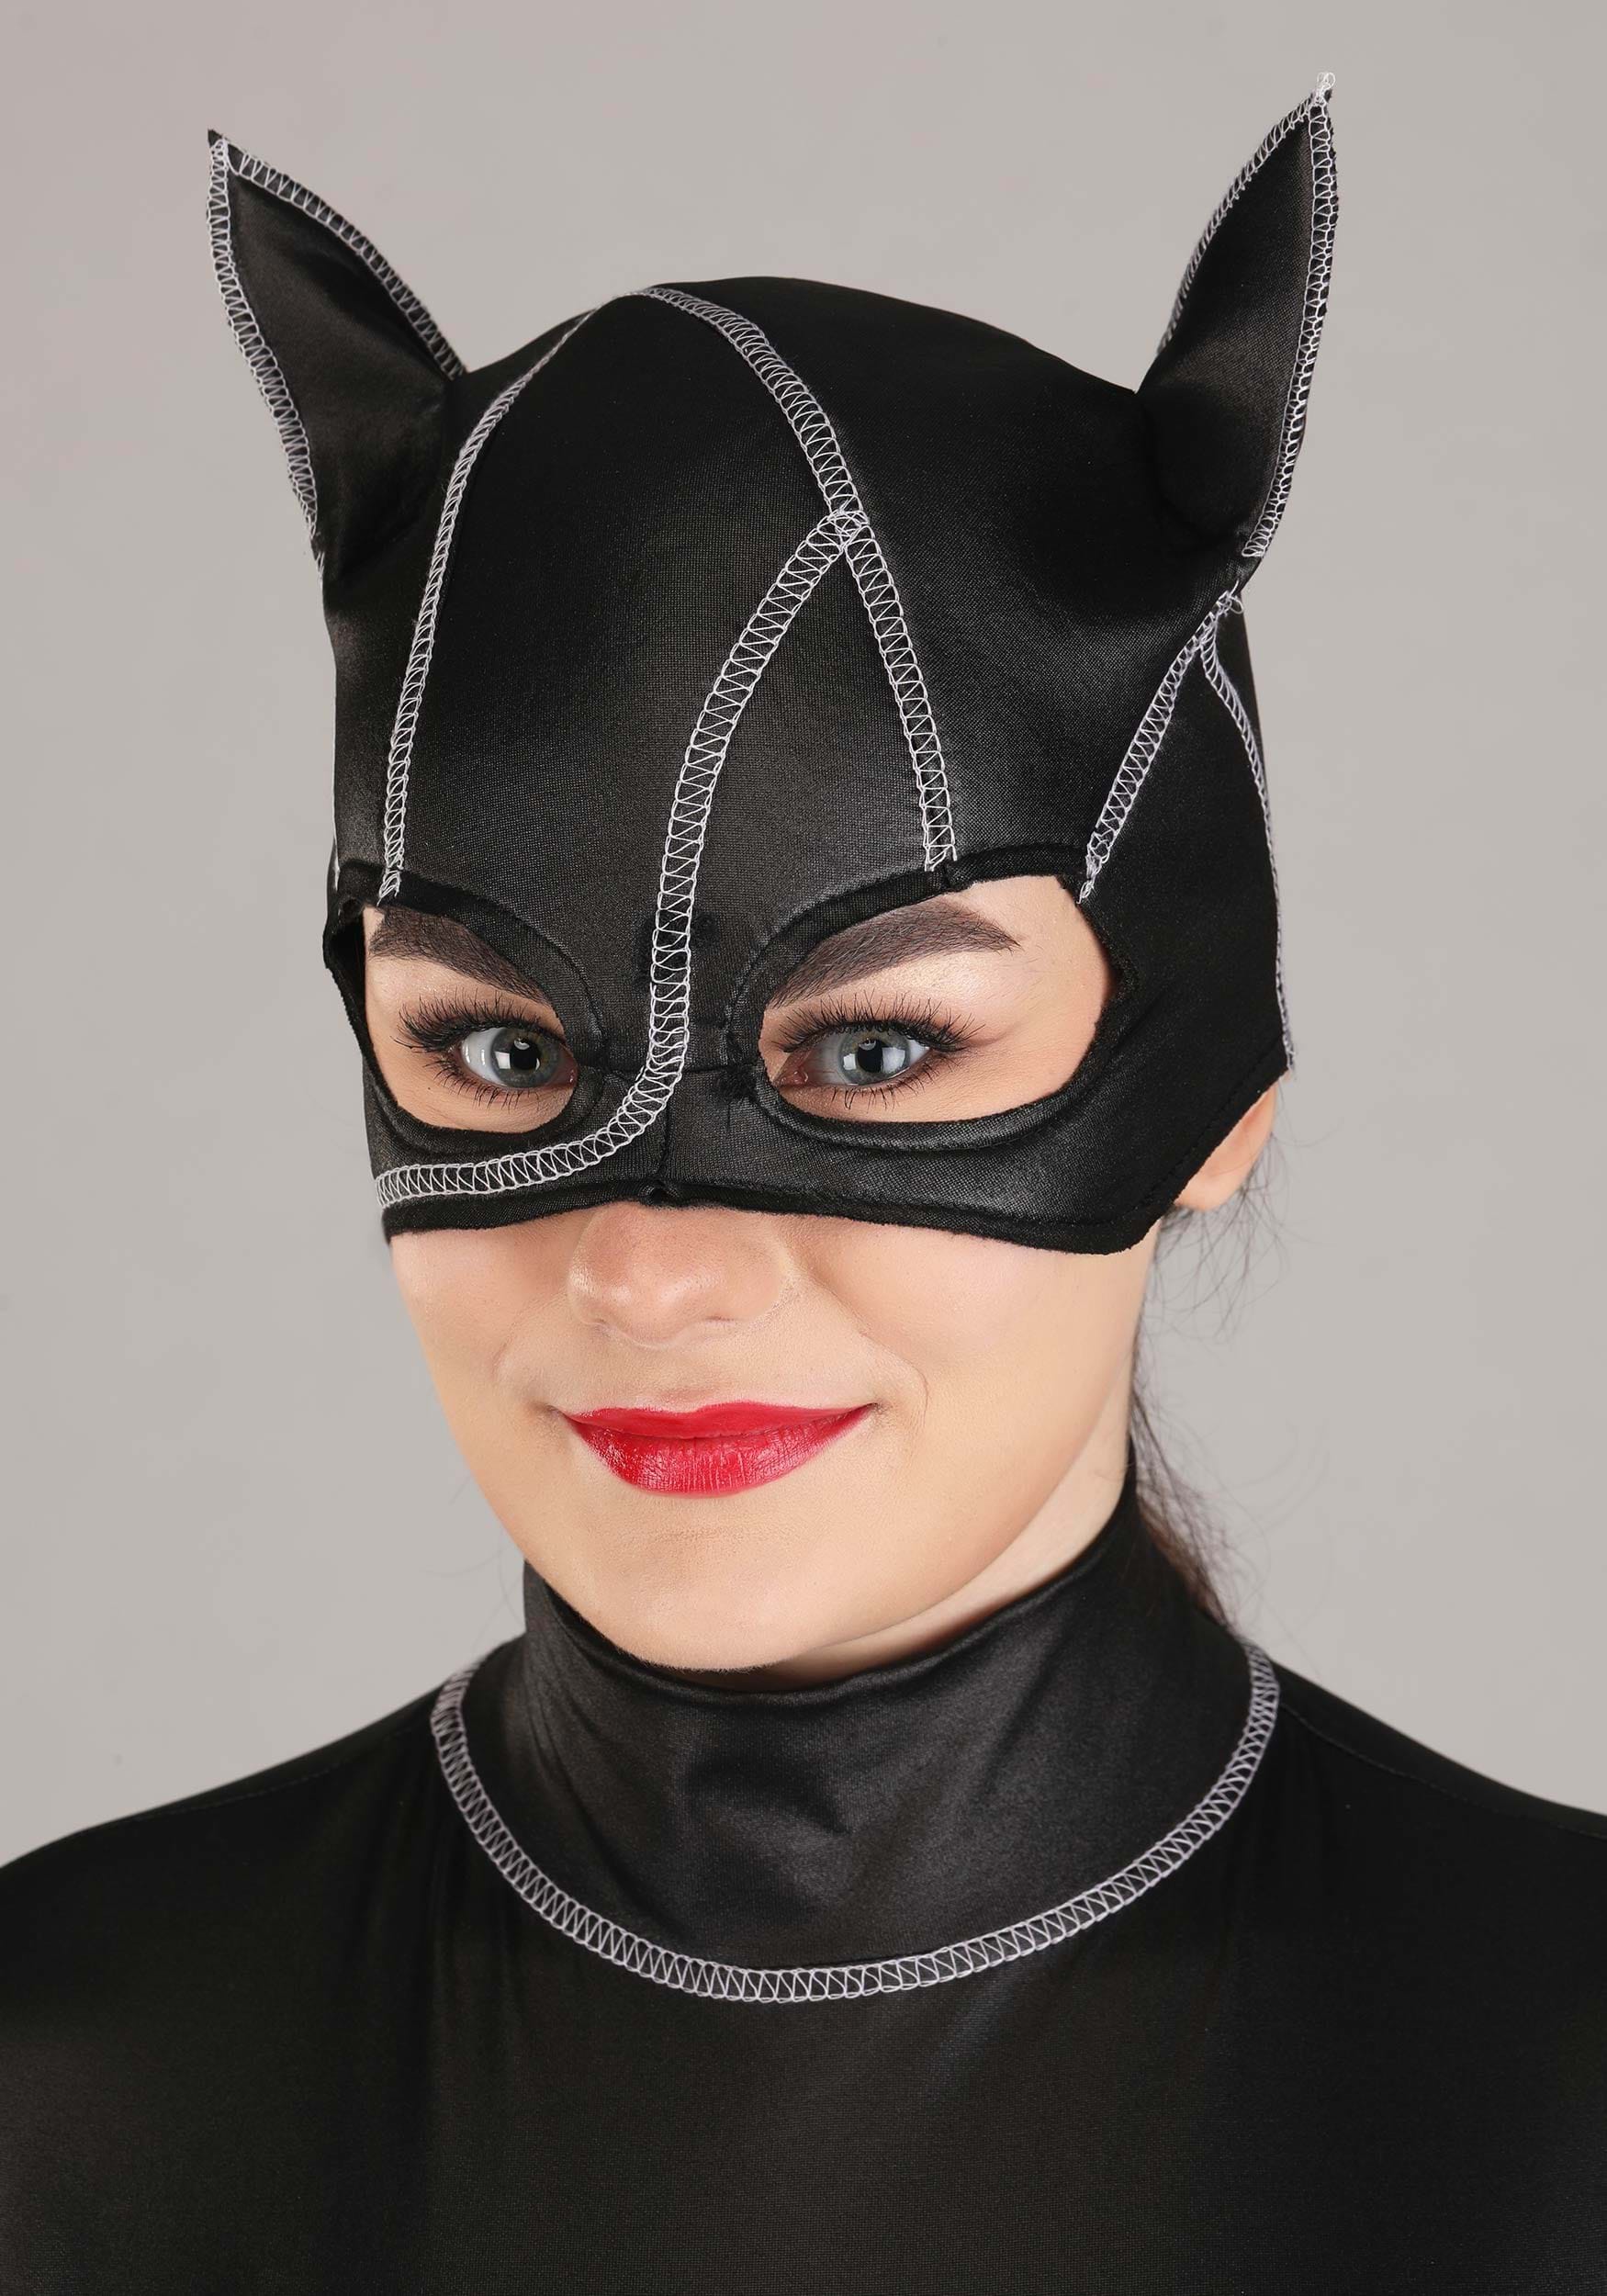 Women's Catwoman Deluxe Costume , DC Women's Costumes